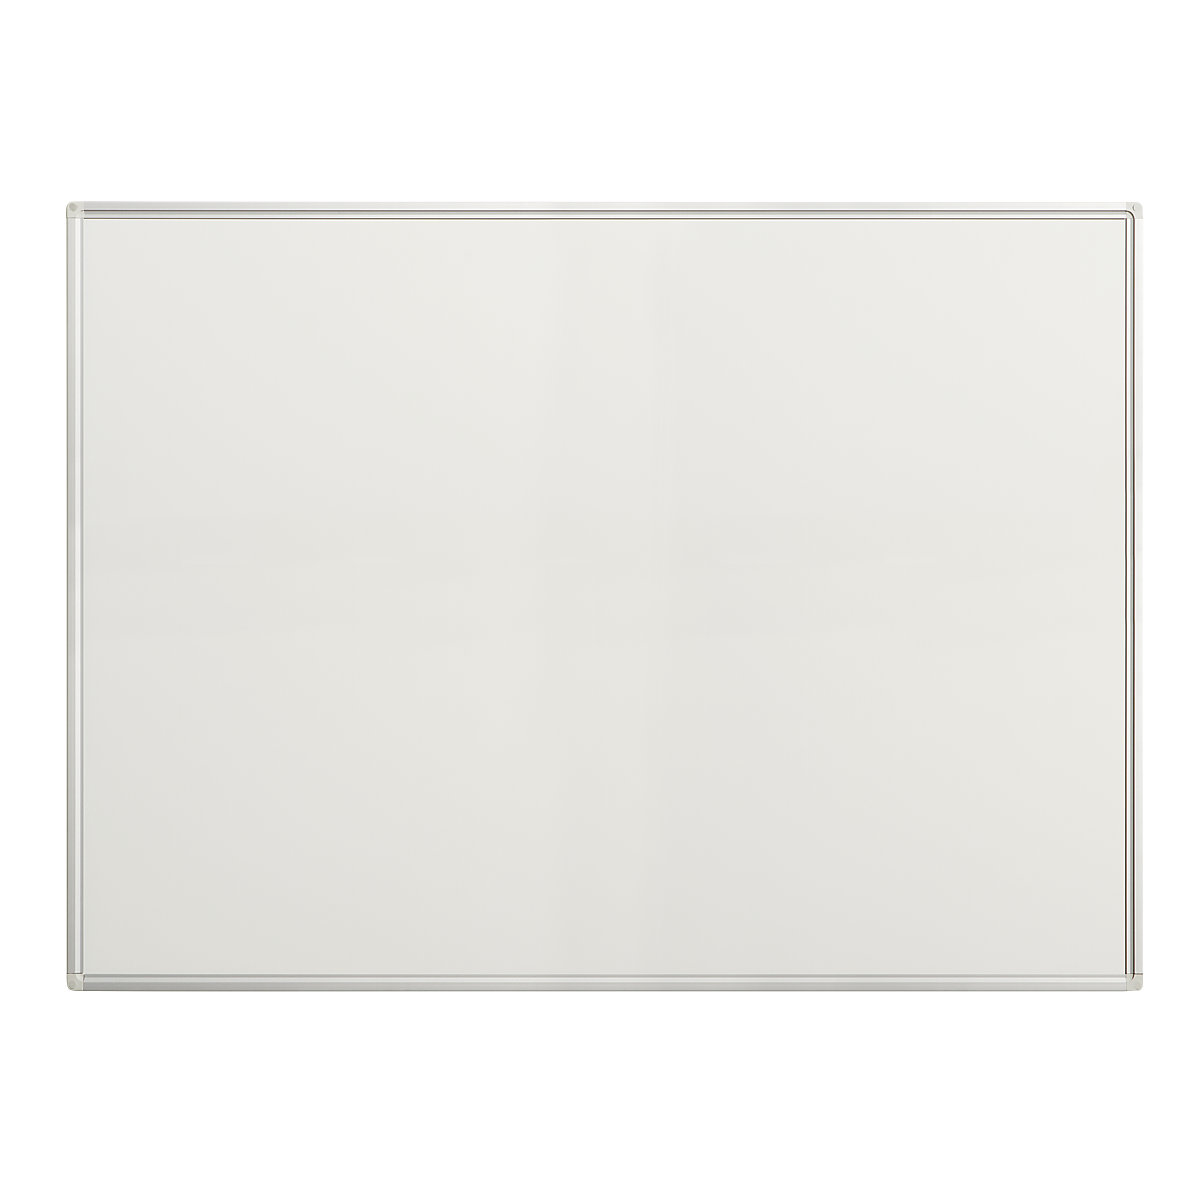 EUROKRAFTpro Whiteboard Economy, Stahlblech, lackiert, BxH 1200 x 900 mm